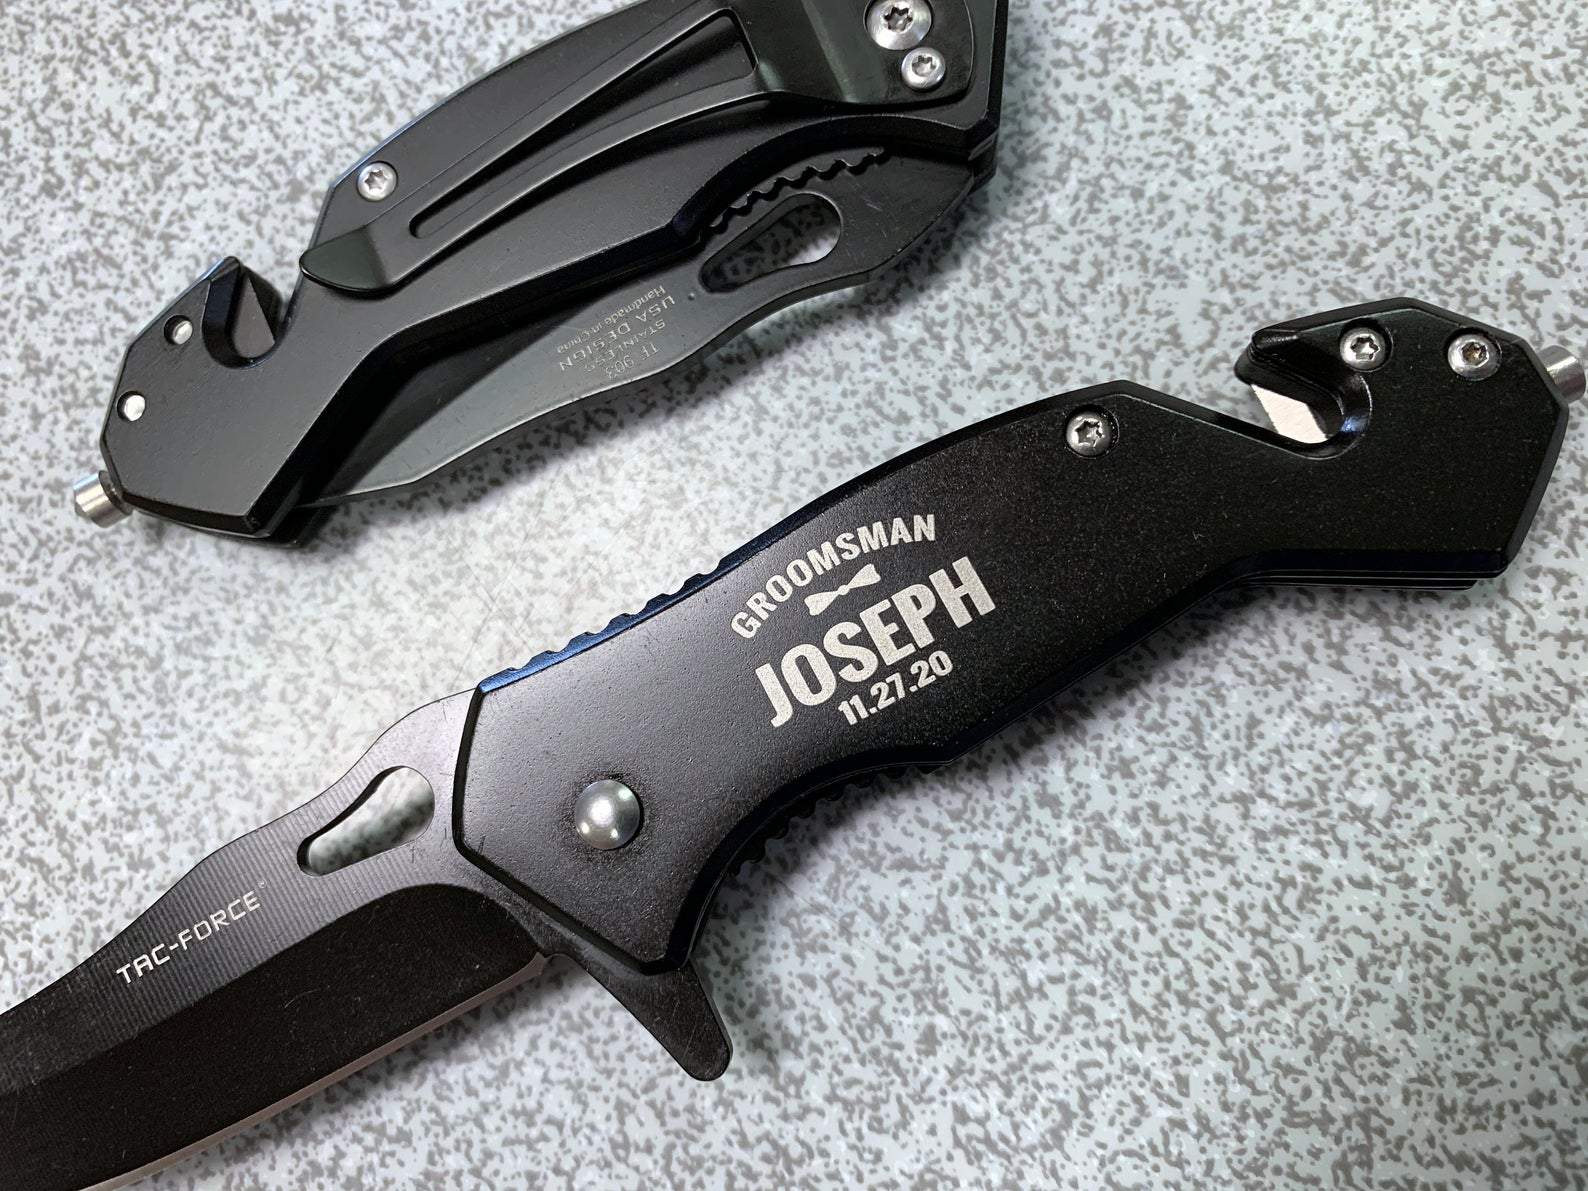 Black Finish 3-Function Pocket Knife with Keychain - JB's Awards & Custom  Apparel